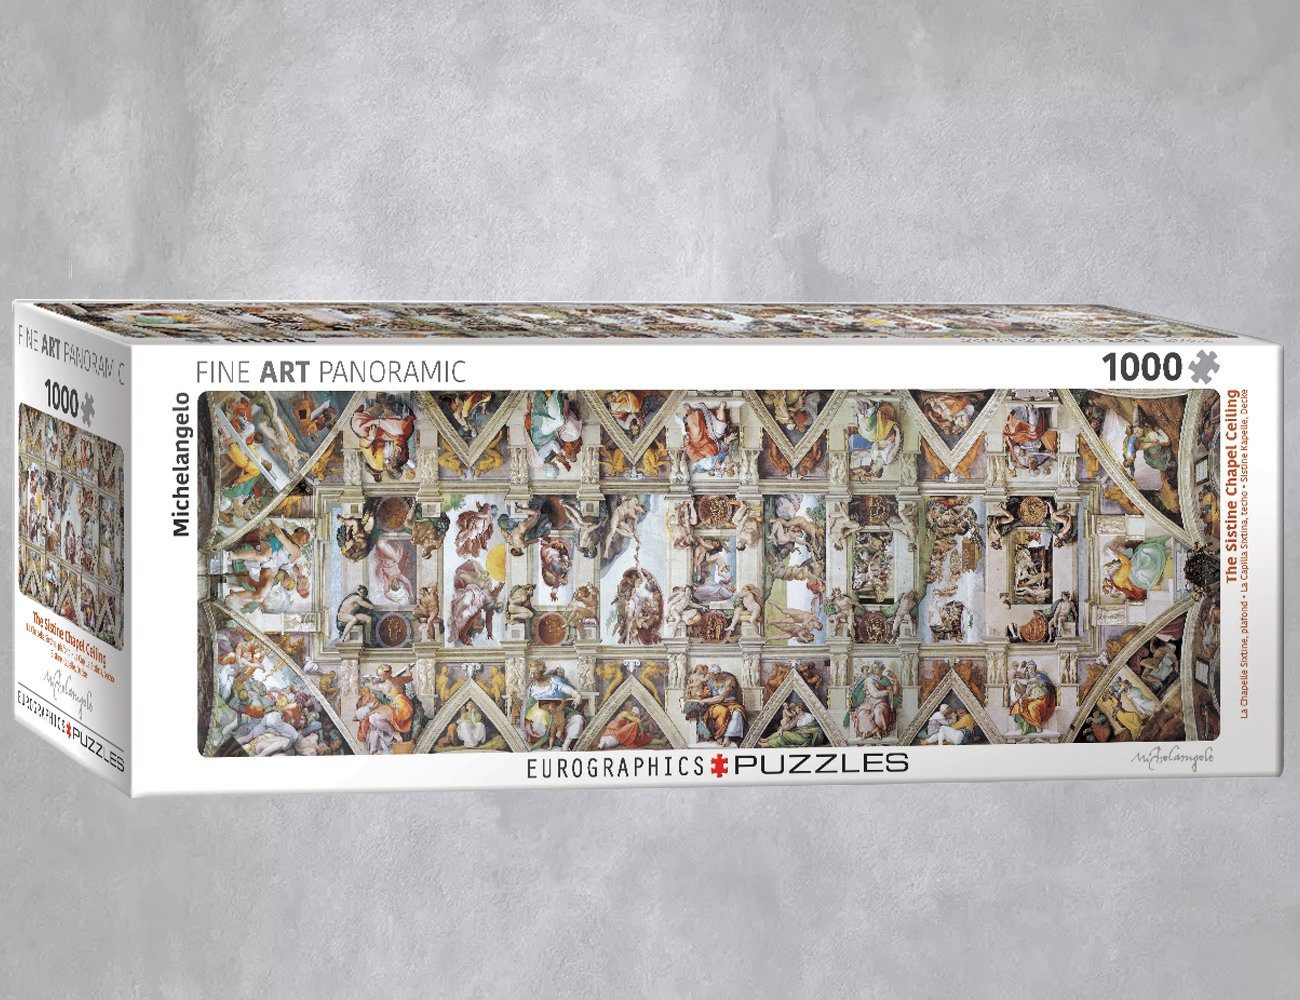 empireposter Puzzle Michelangelo - Sixtinischen Kapelle - 1000 Teile Panorama Puzzle - Format 96x32 cm, 1000 Puzzleteile